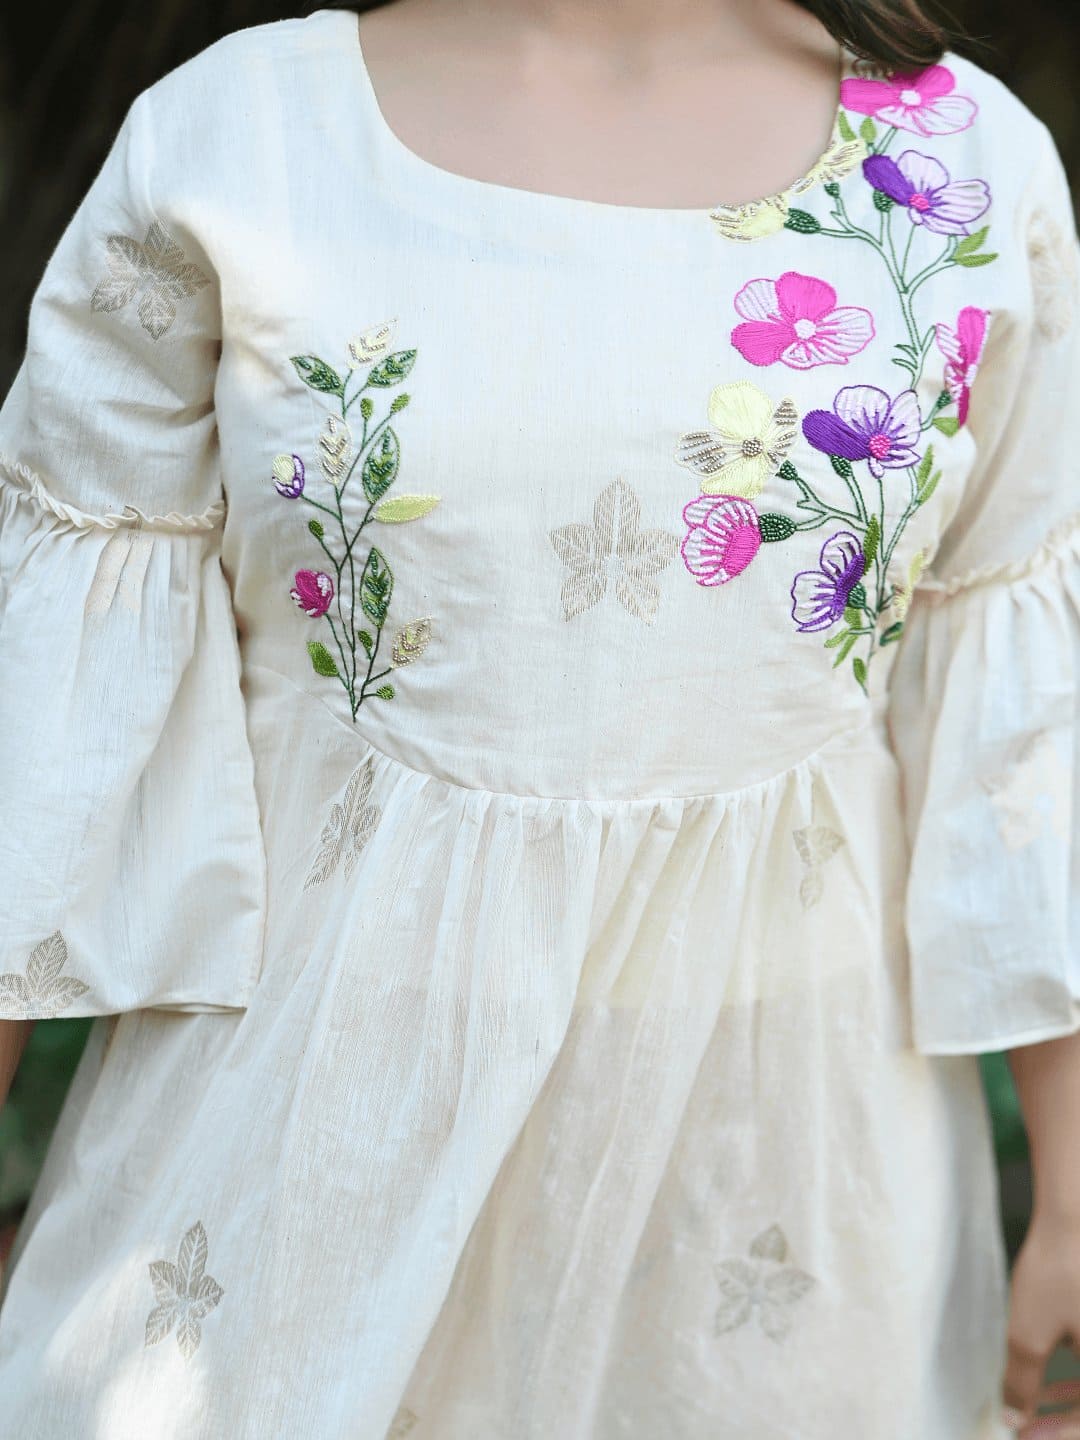 Off-White Dainty Dazzel Dress - Charkha TalesOff-White Dainty Dazzel Dress